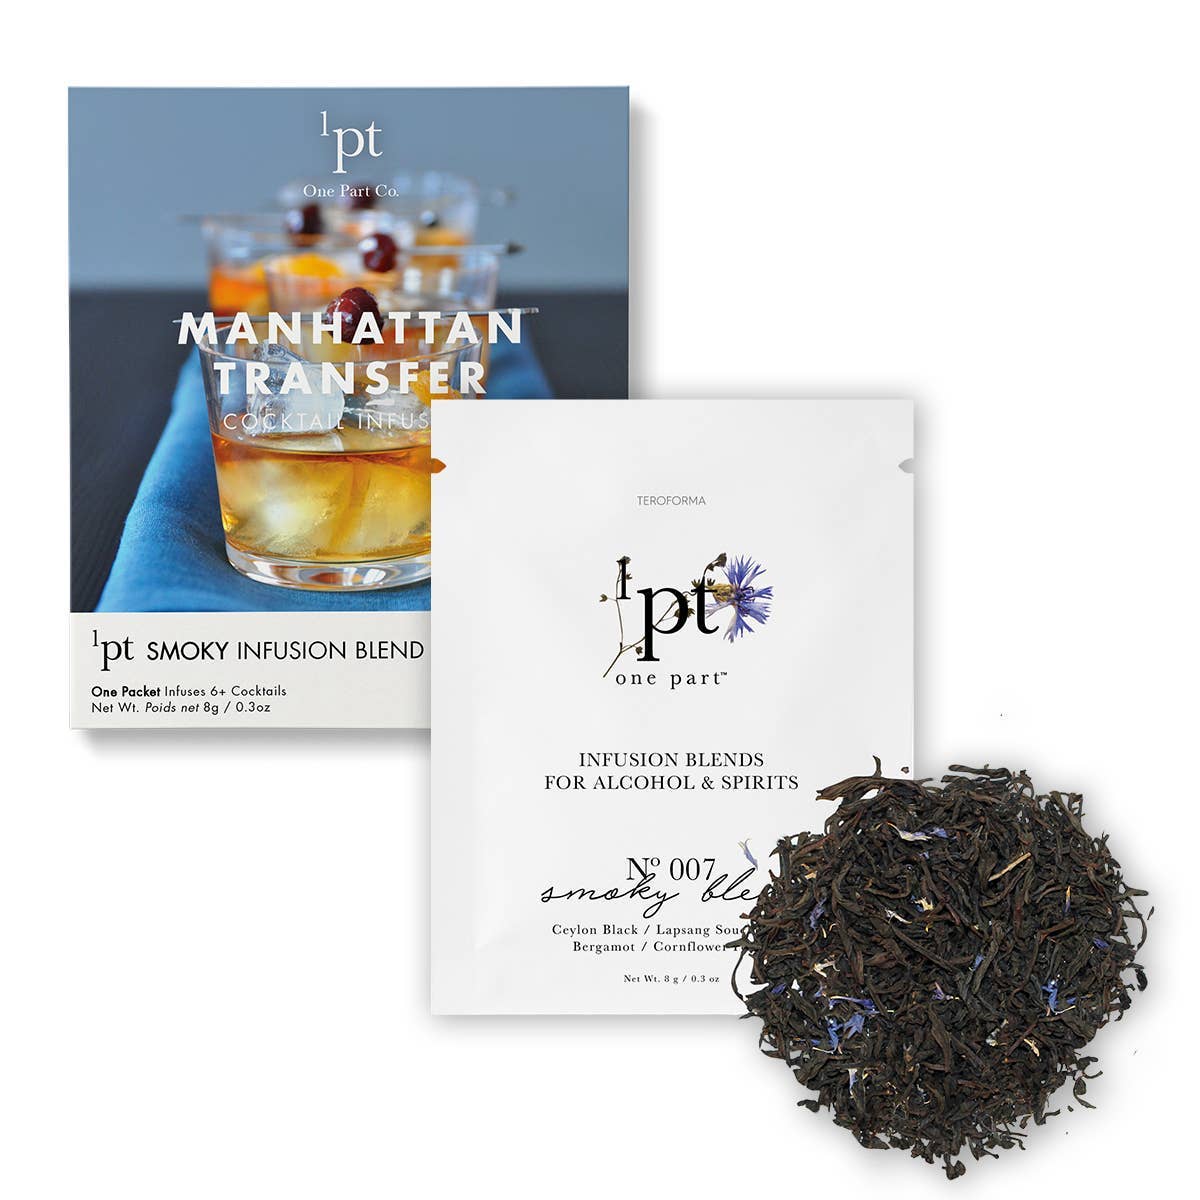 Manhattan Transfer Cocktail Infusion Kit